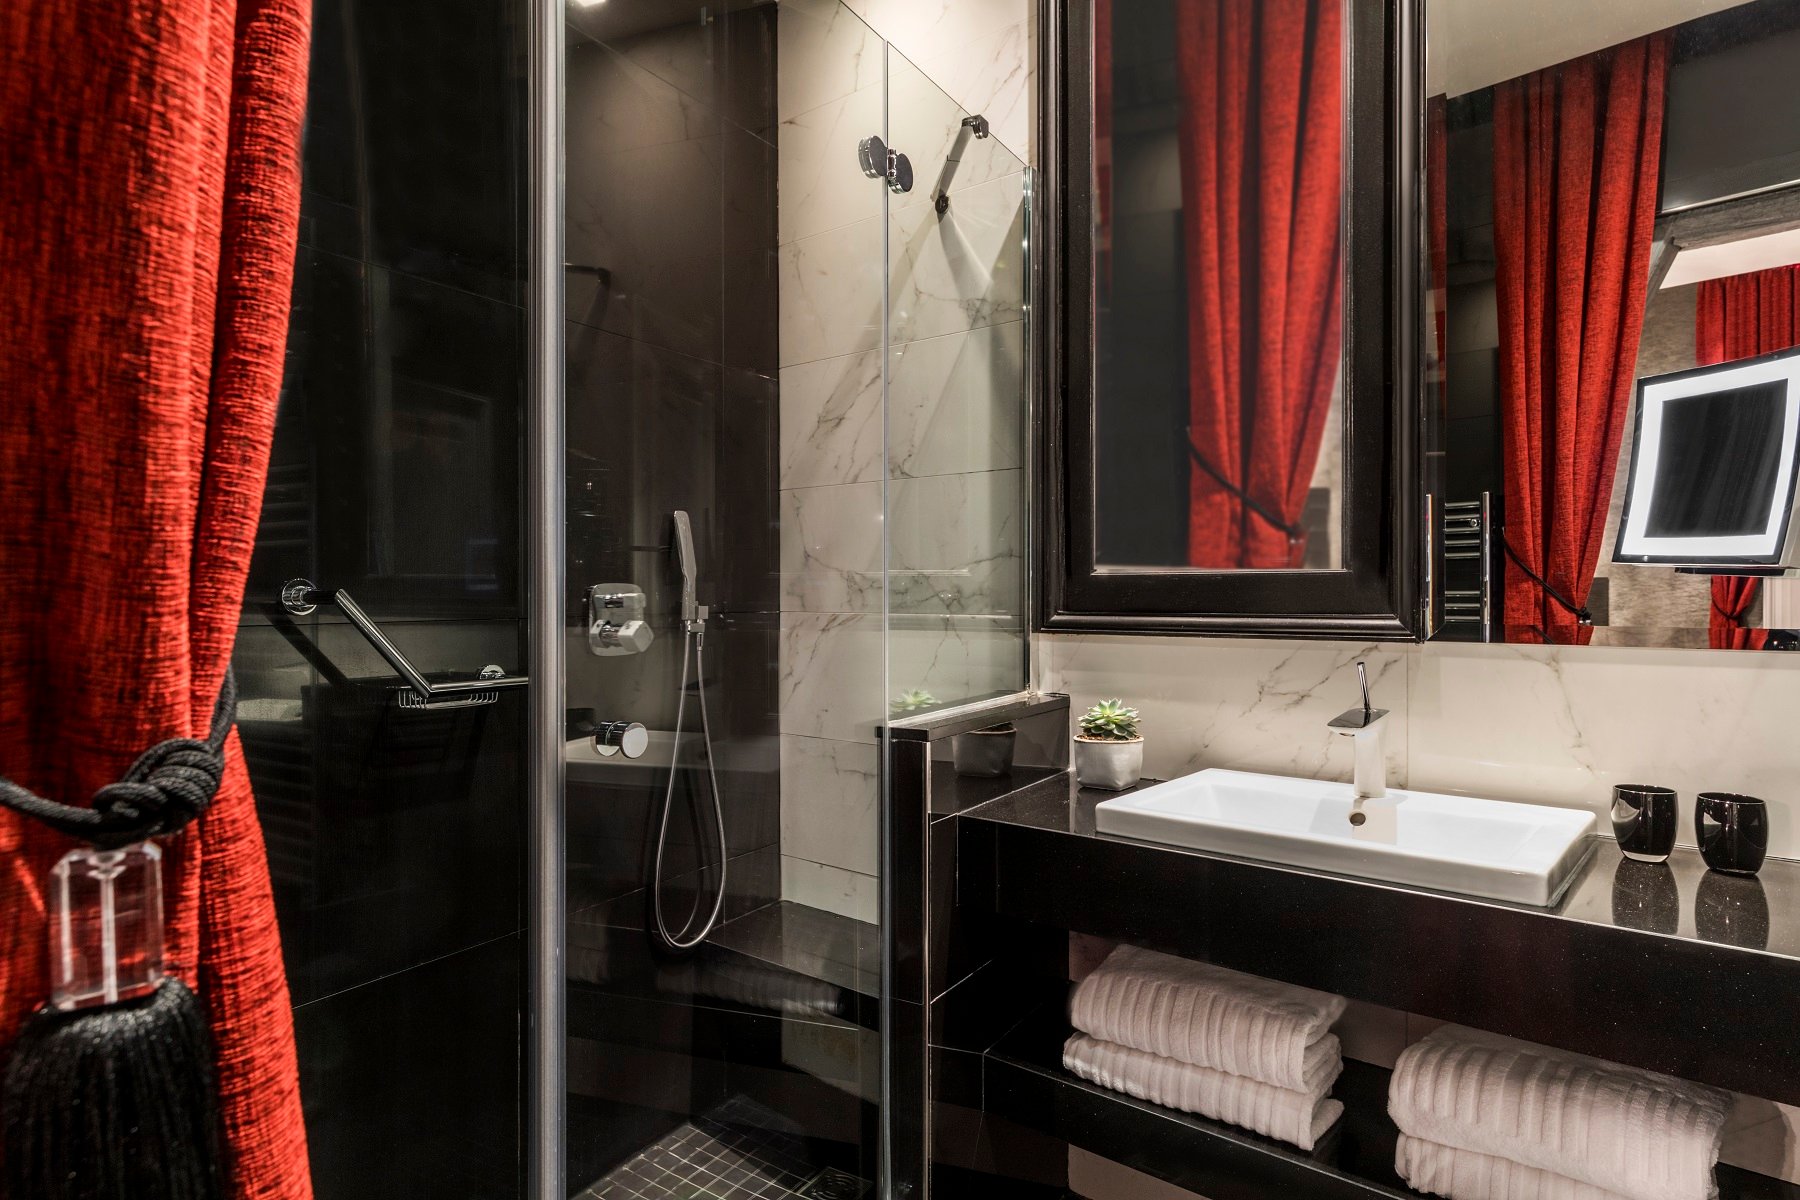 Maison Albar Hotels Le Champs-Elysées bathroom superior room